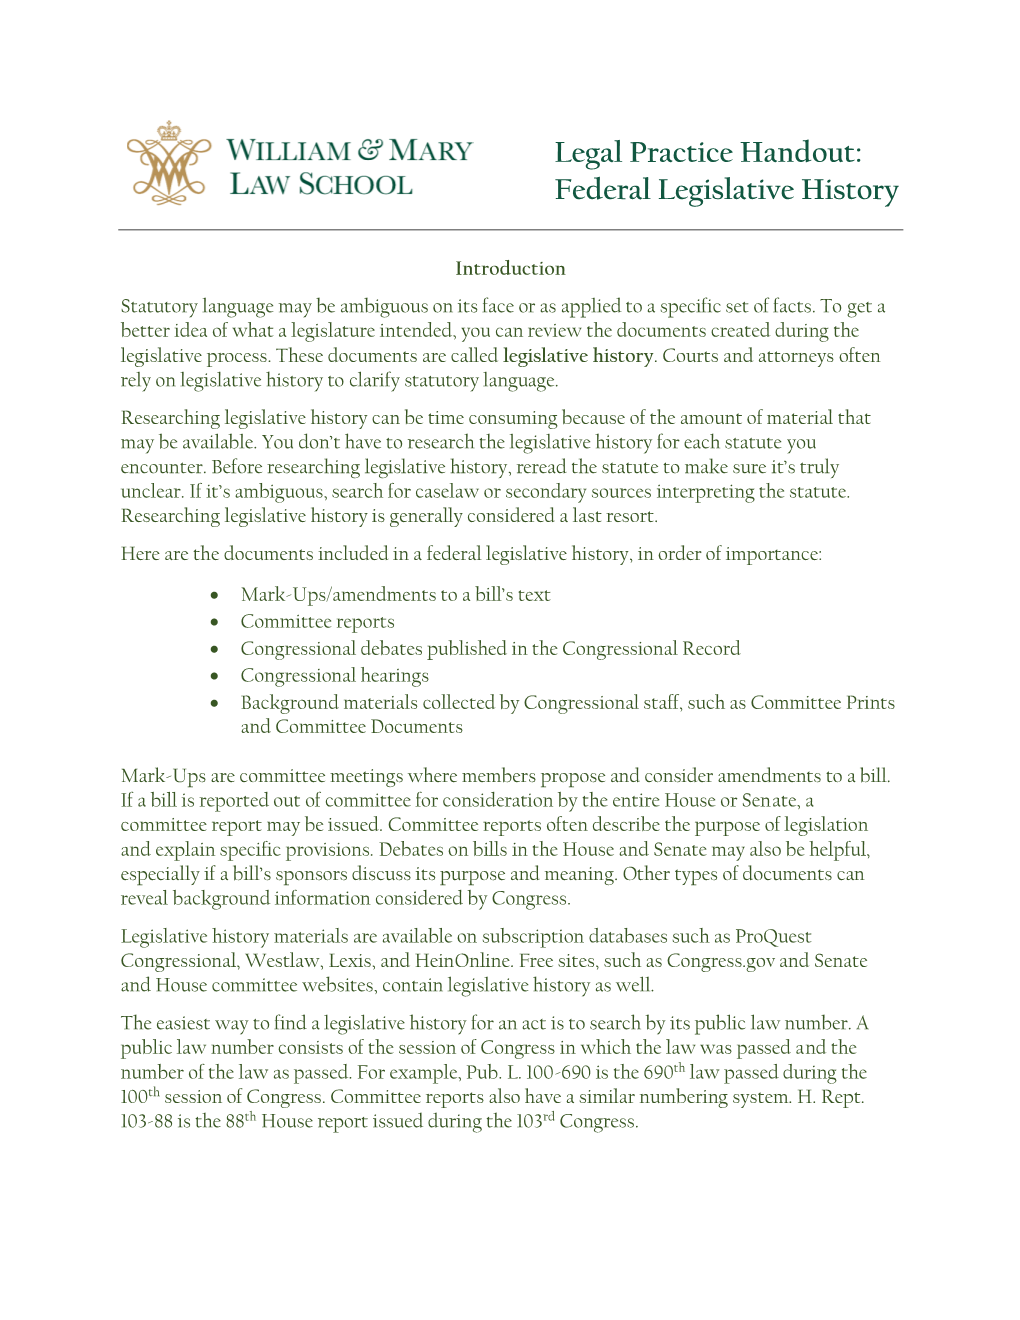 Legal Practice Handout: Federal Legislative History